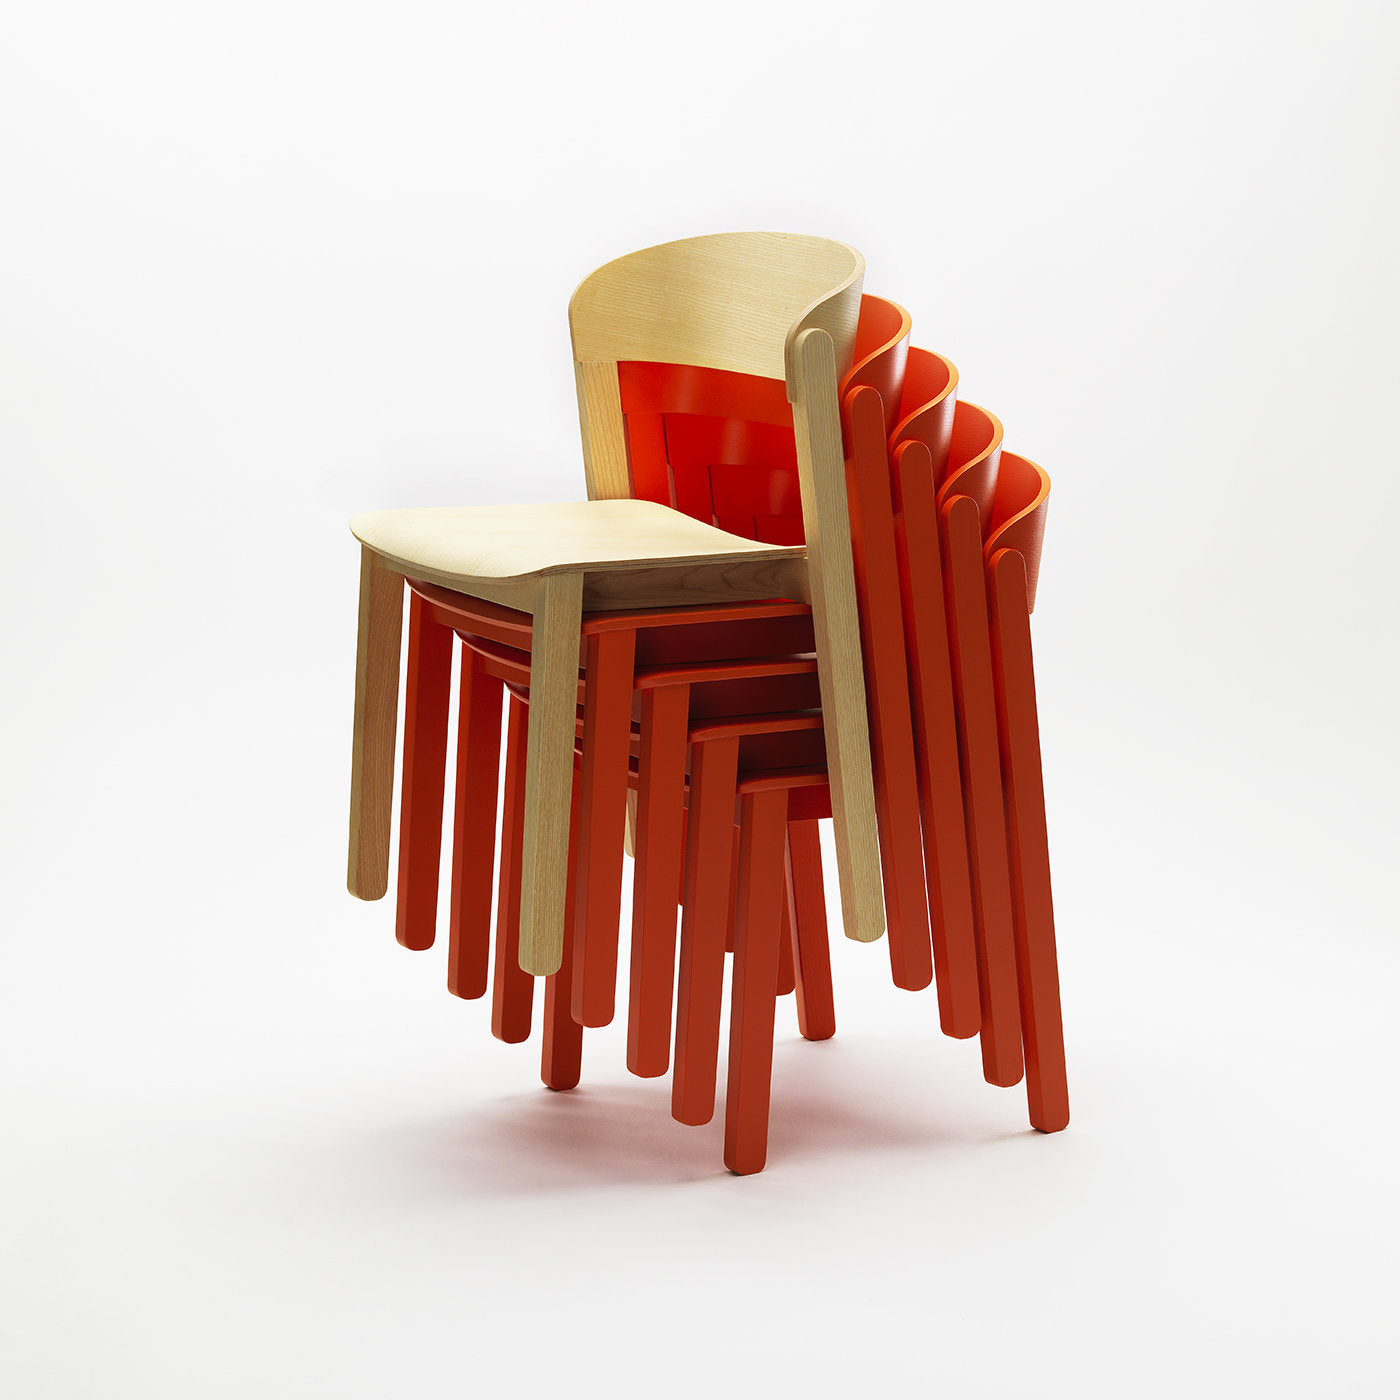 Set of 2 Salmon Orange Pur Chairs by Note Design Studio - Alternative view 3